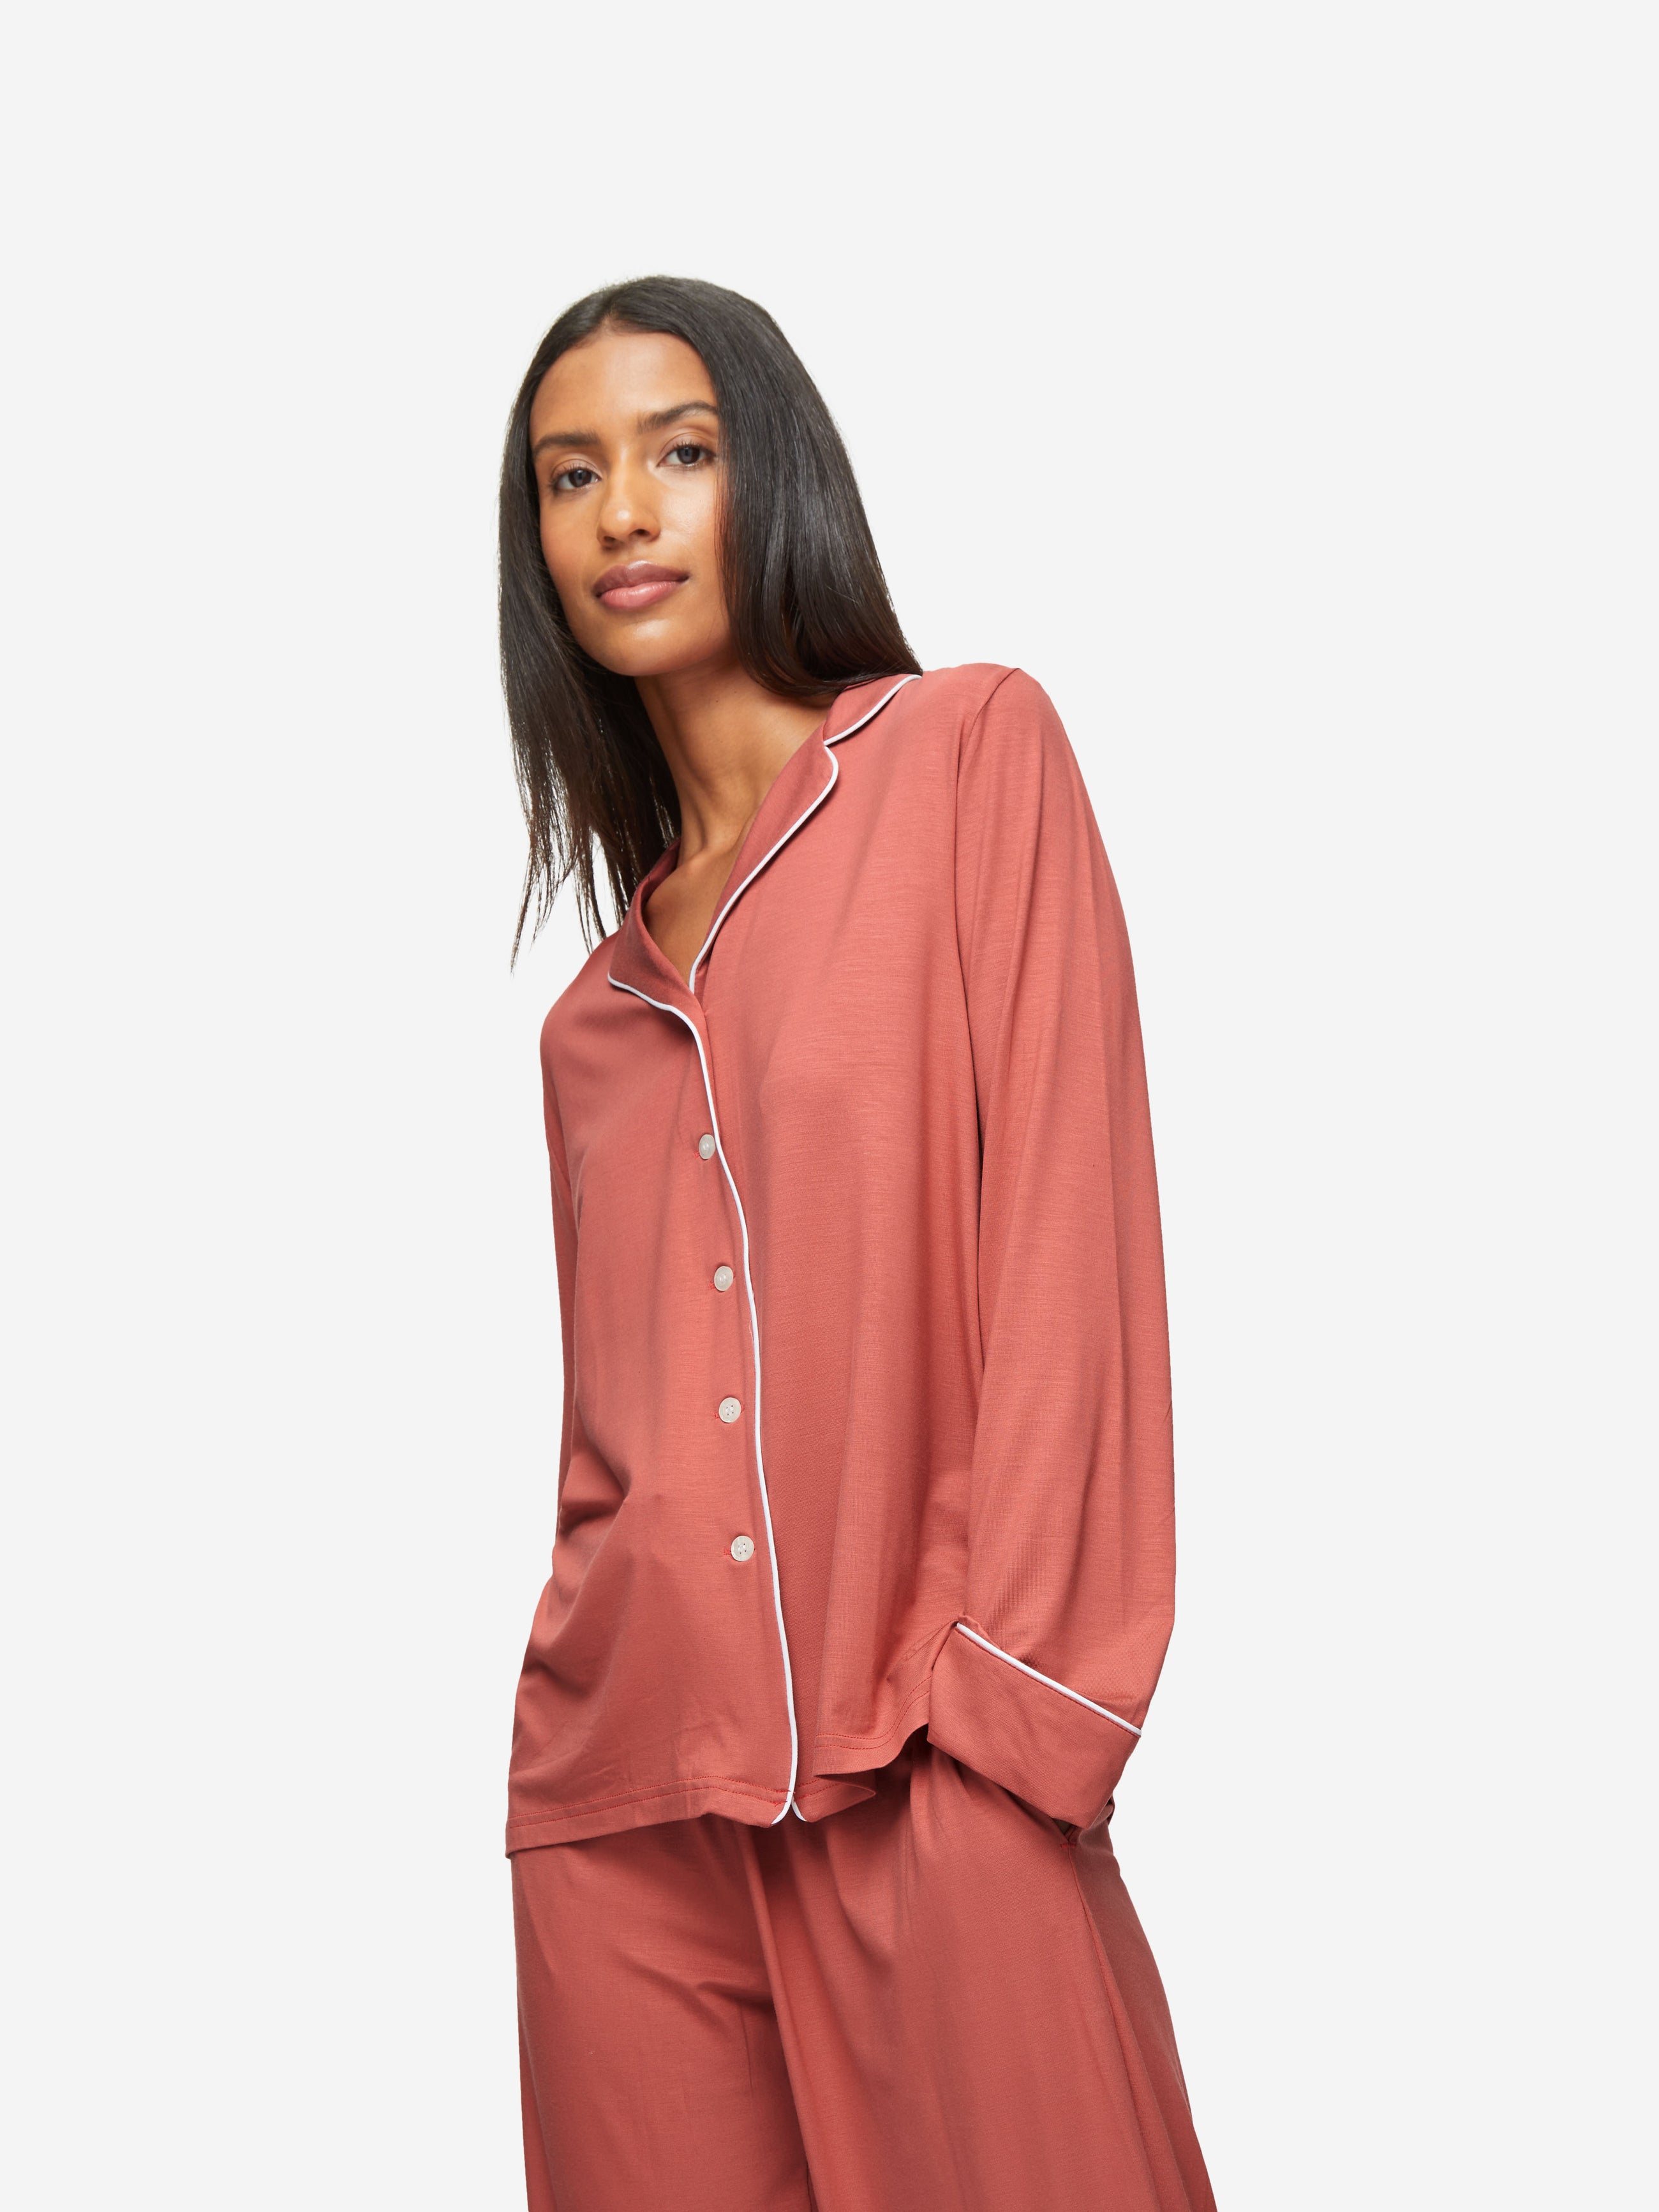 Women's Pyjamas Lara Micro Modal Stretch Soft Cedar